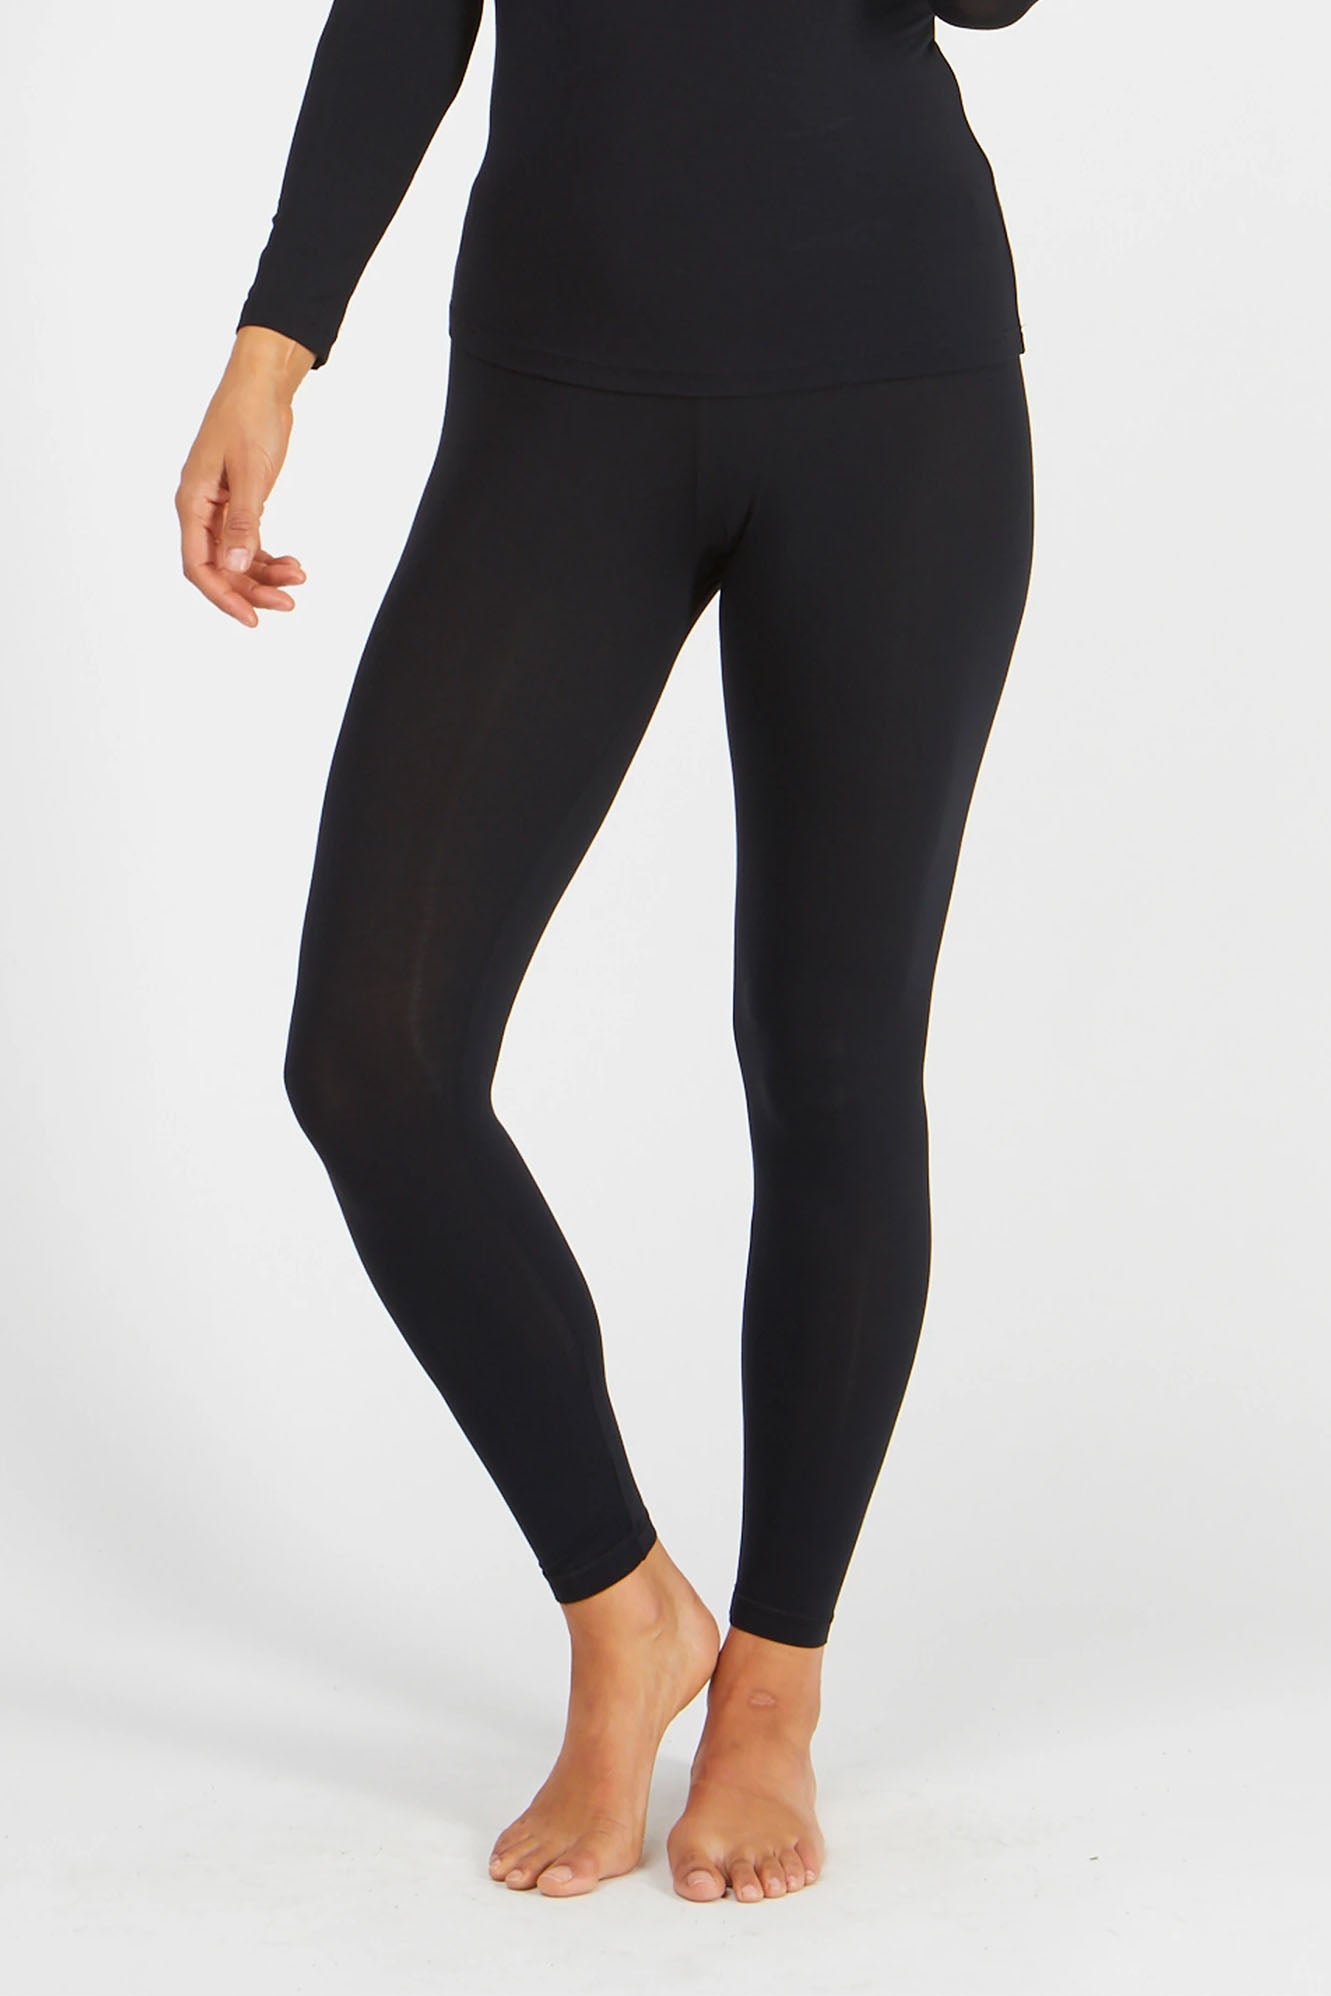 Woman wearing Tani 89118 leggings in black